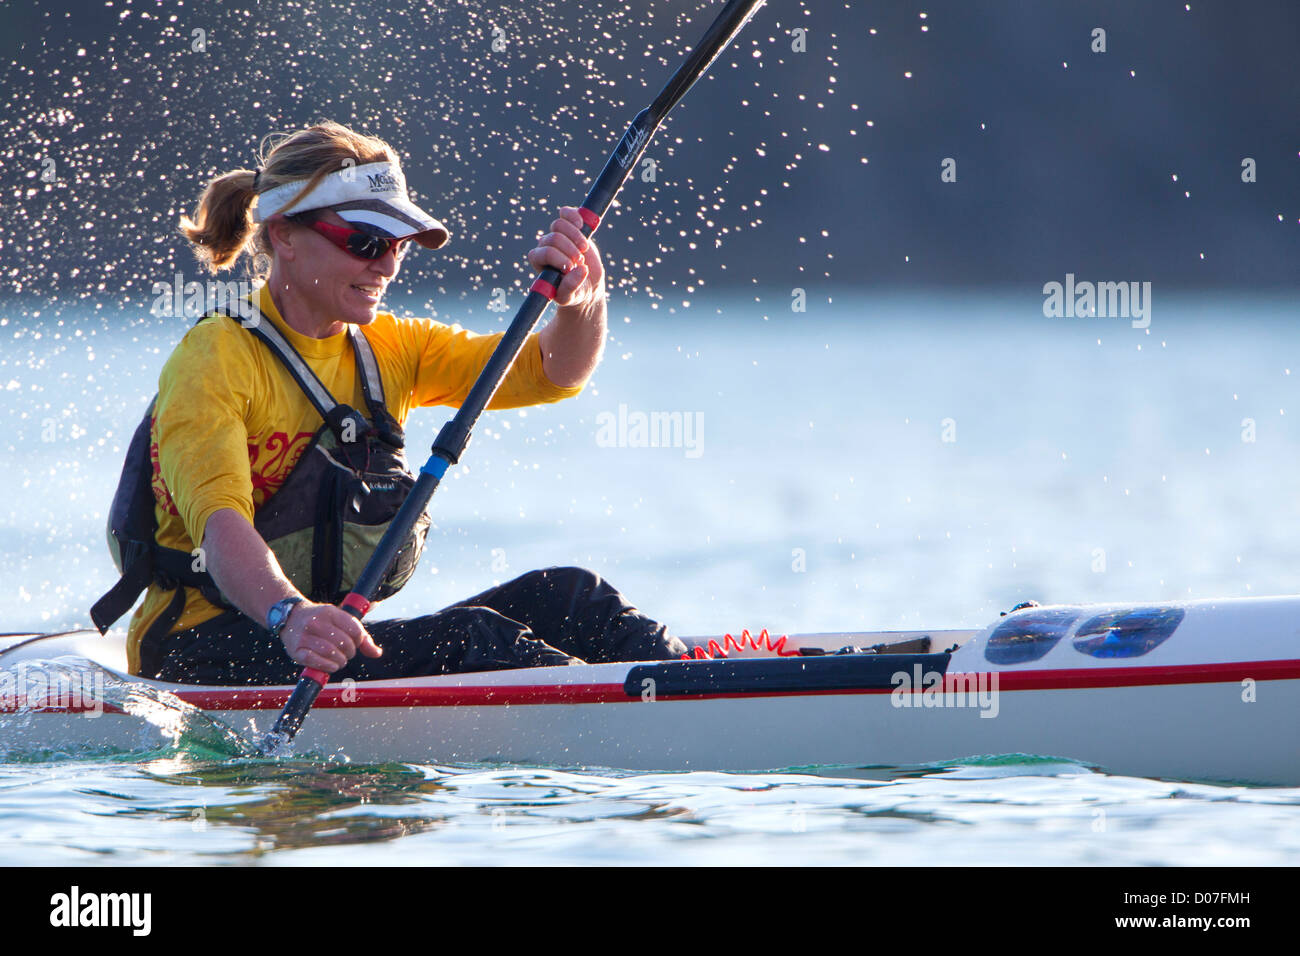 USA, Washington State. A woman kayaker races her high-performance surf ski kayak on a inland waterway. (MR) Stock Photo